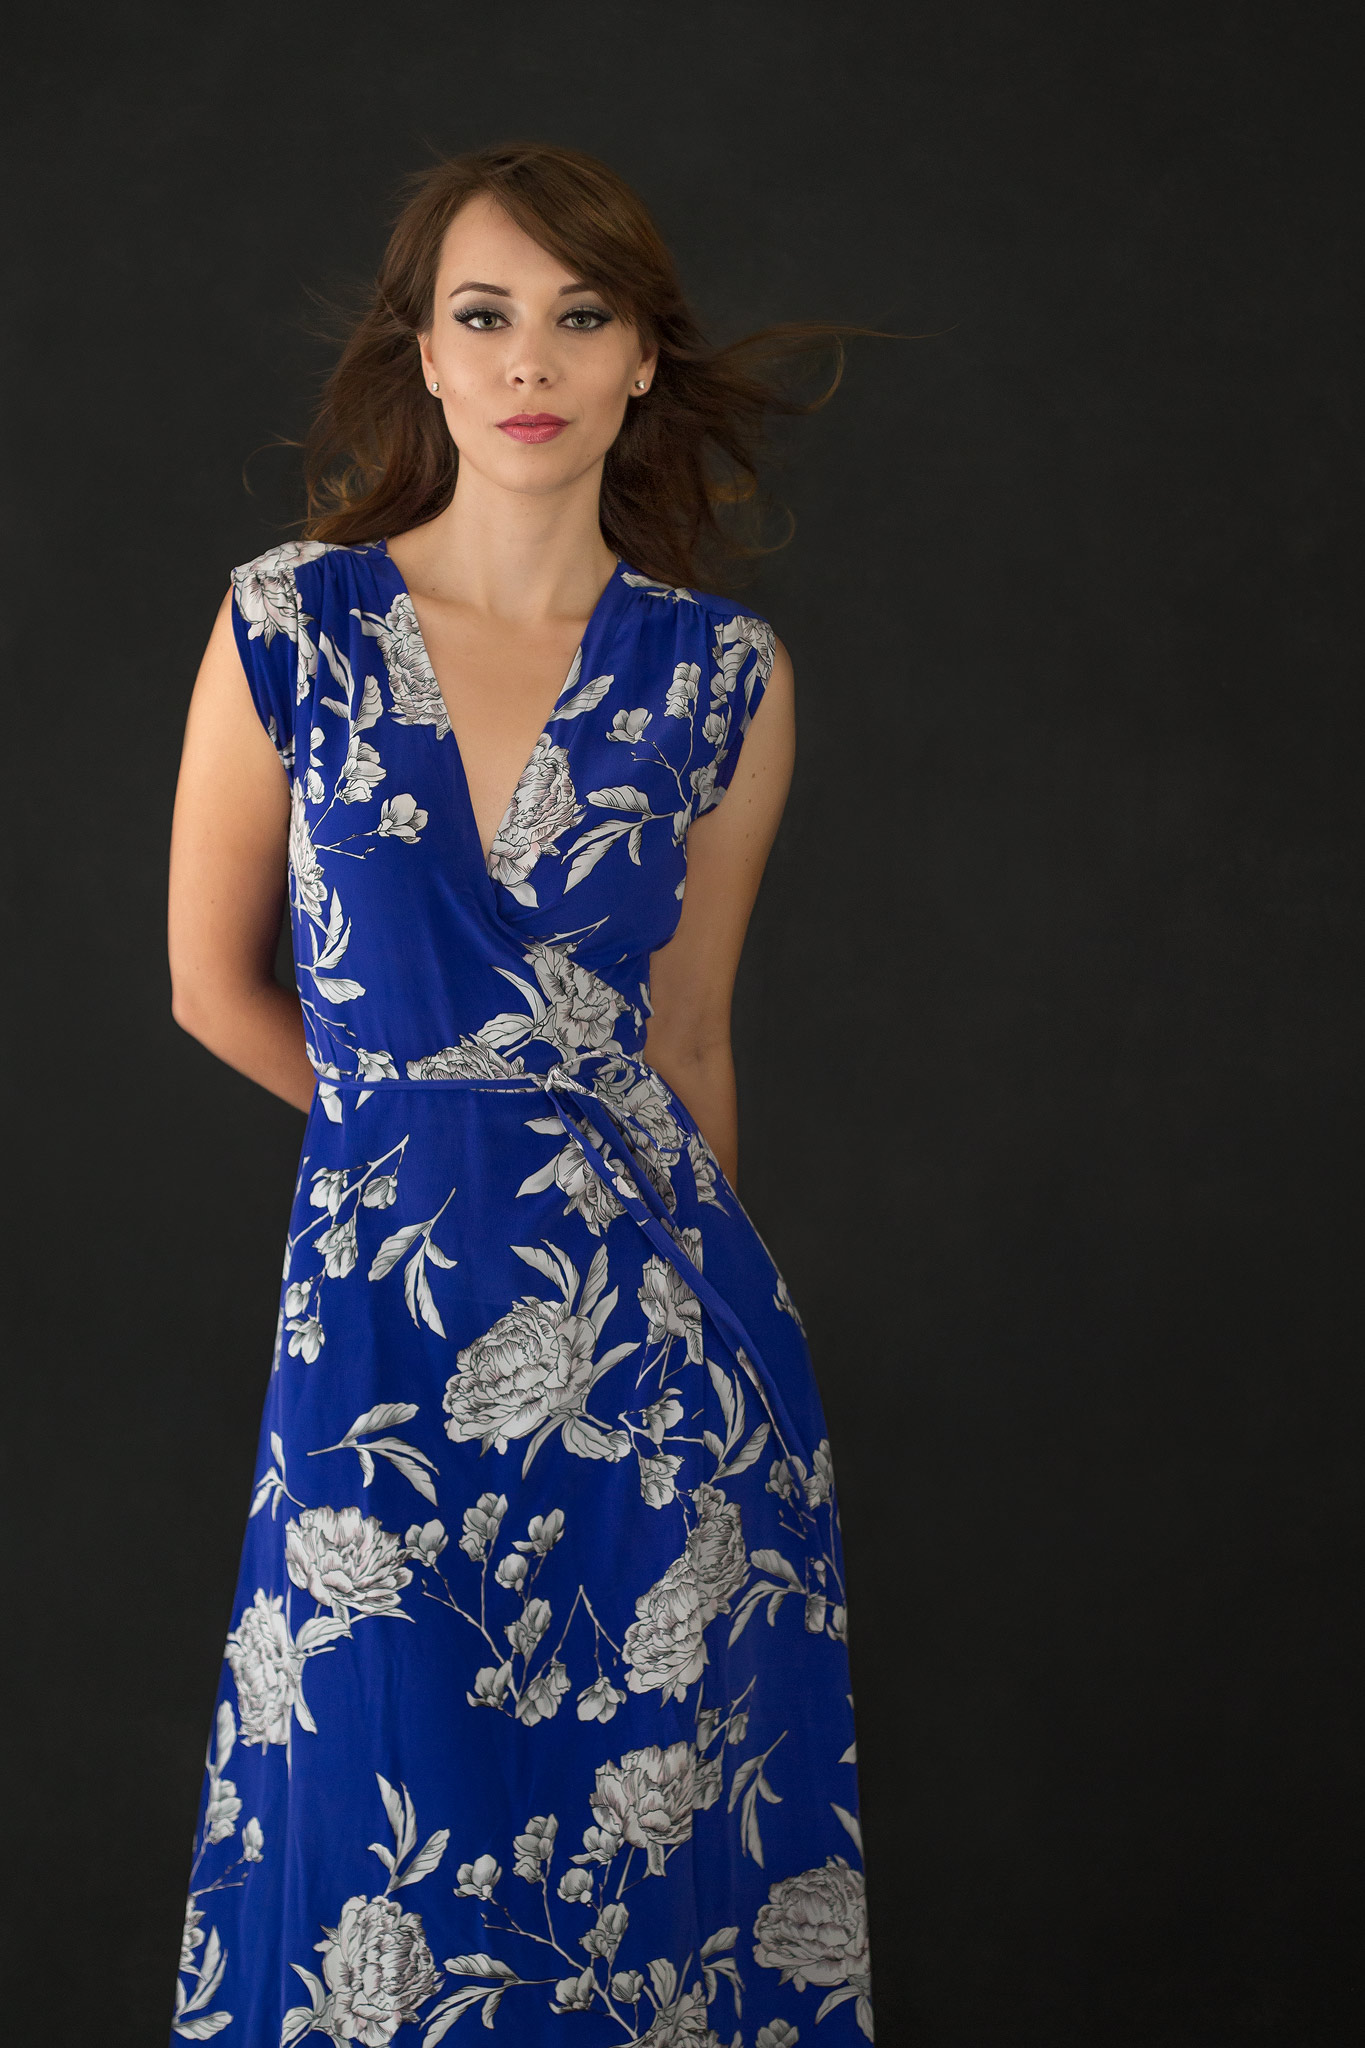 Carole-B-Eves-Couture-Portraits-Yumi-Kim-Blue-Floral-Dress